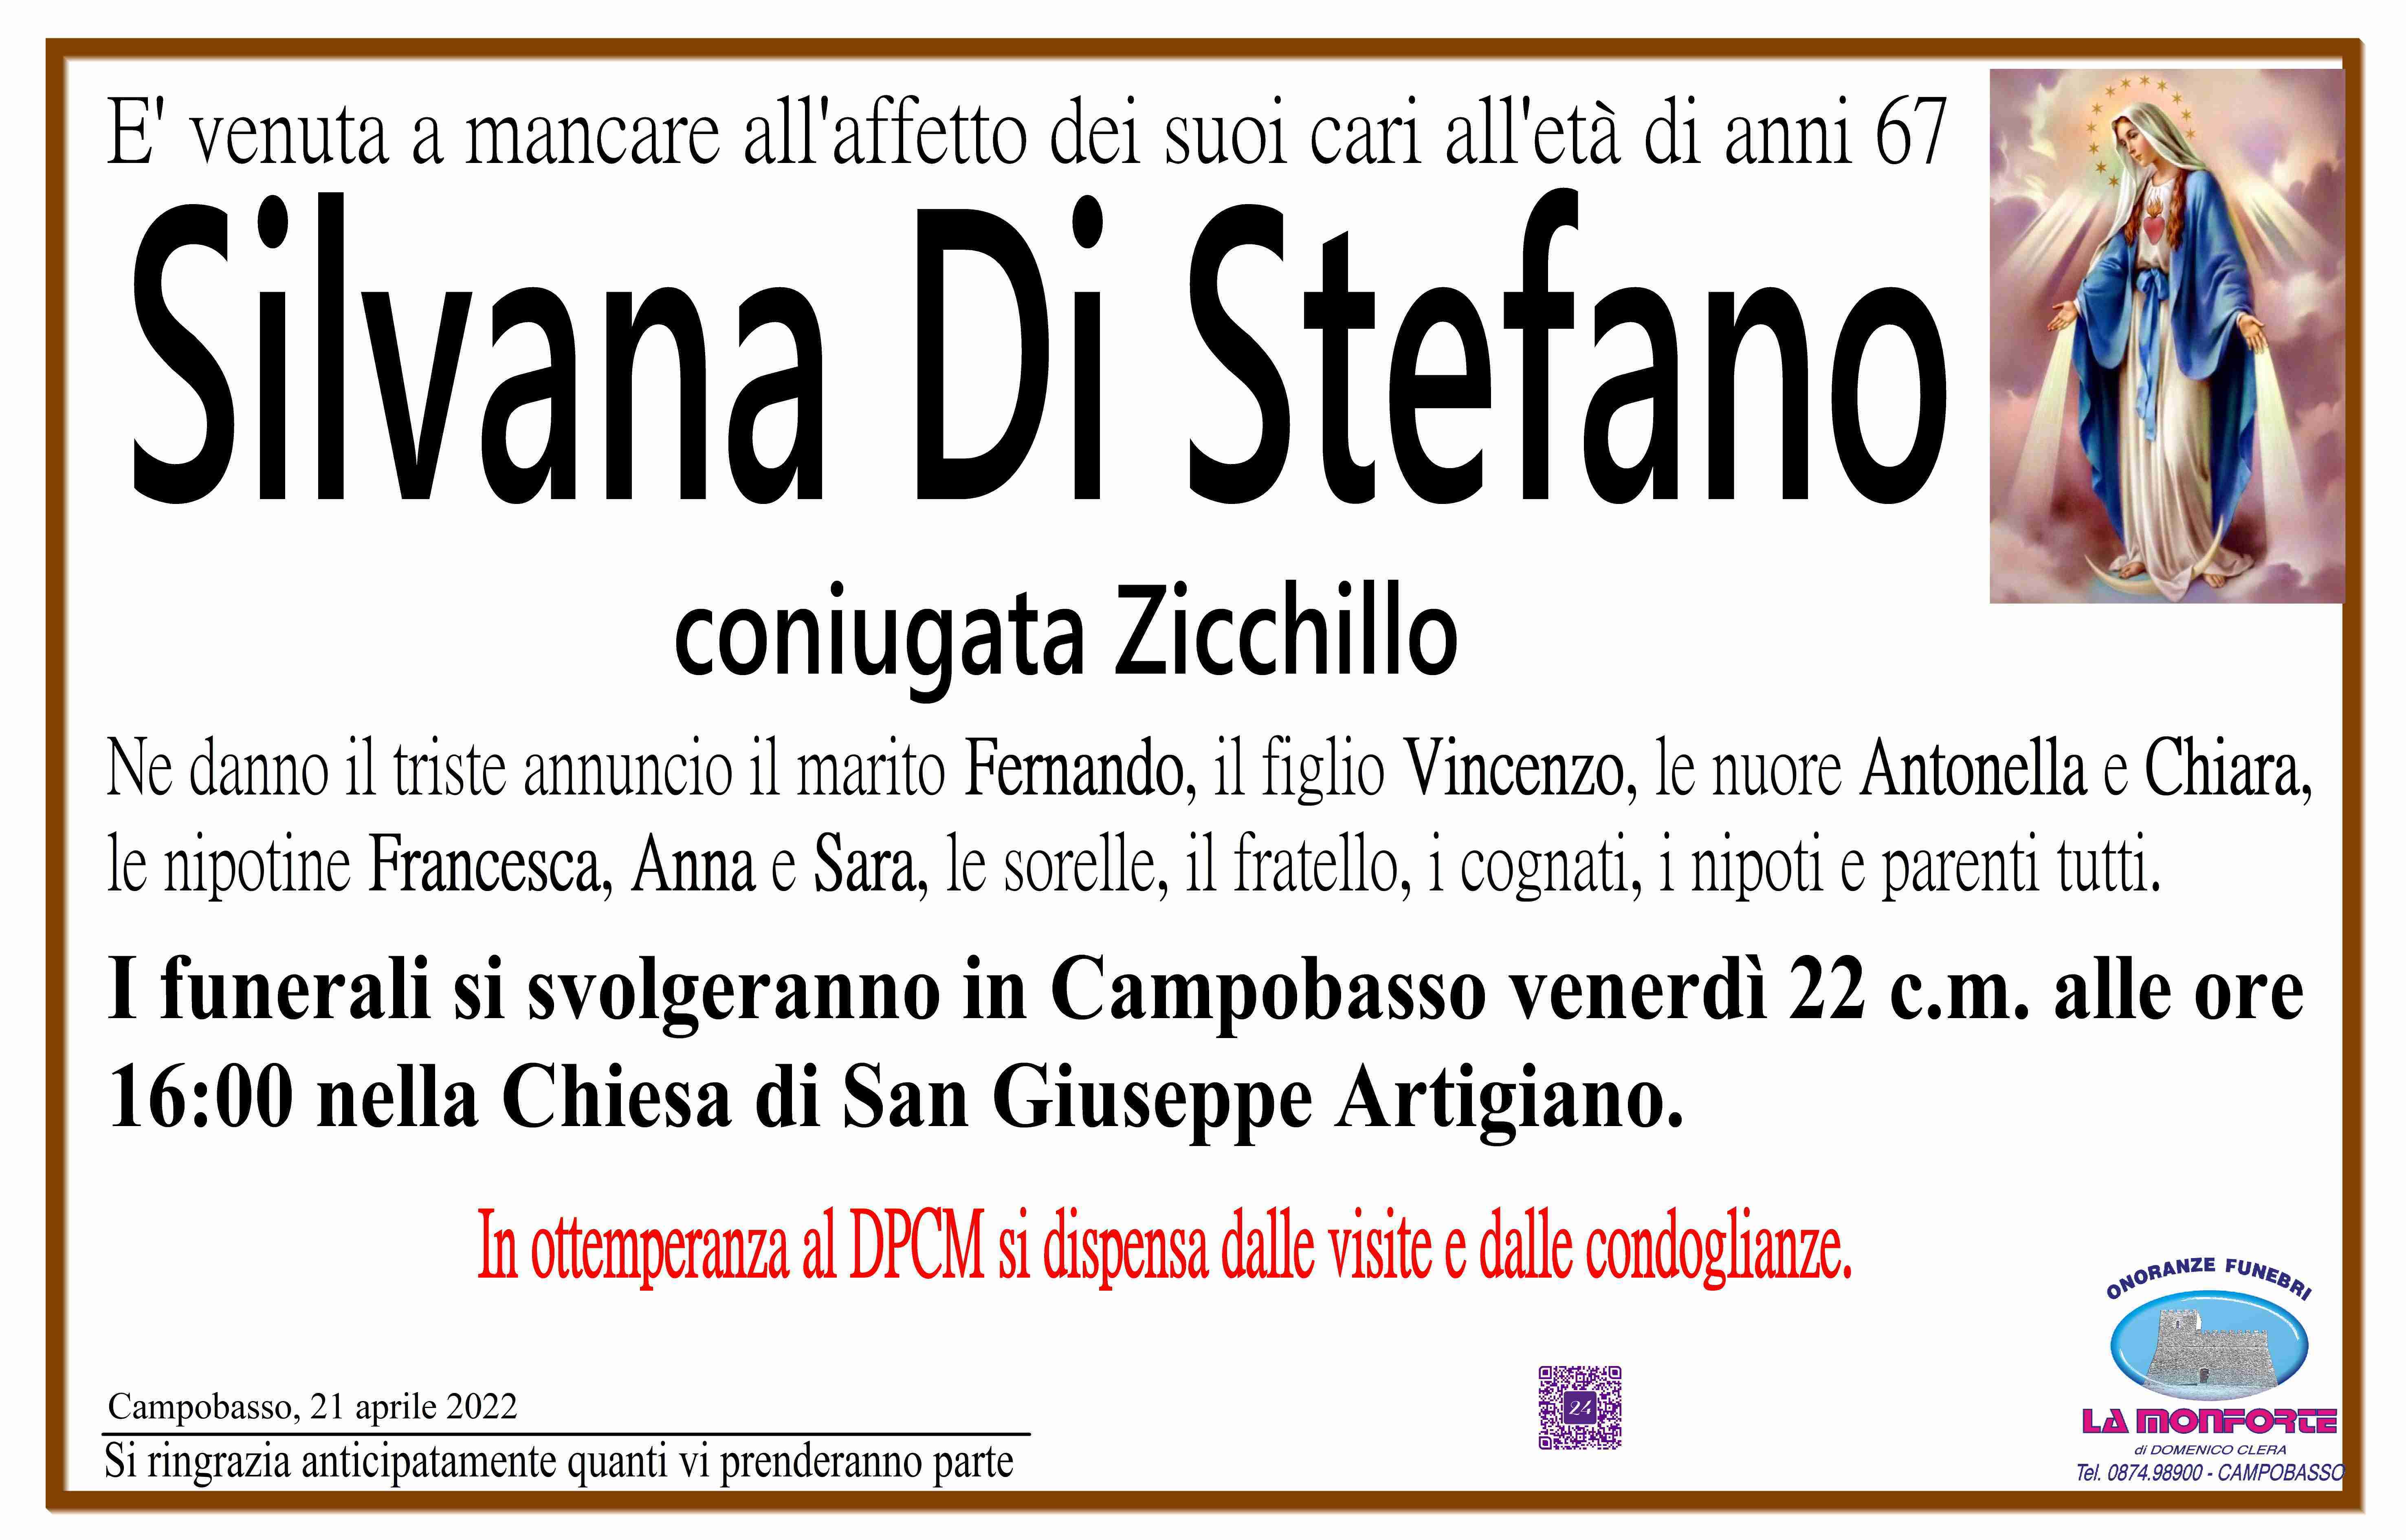 Silvana Di Stefano